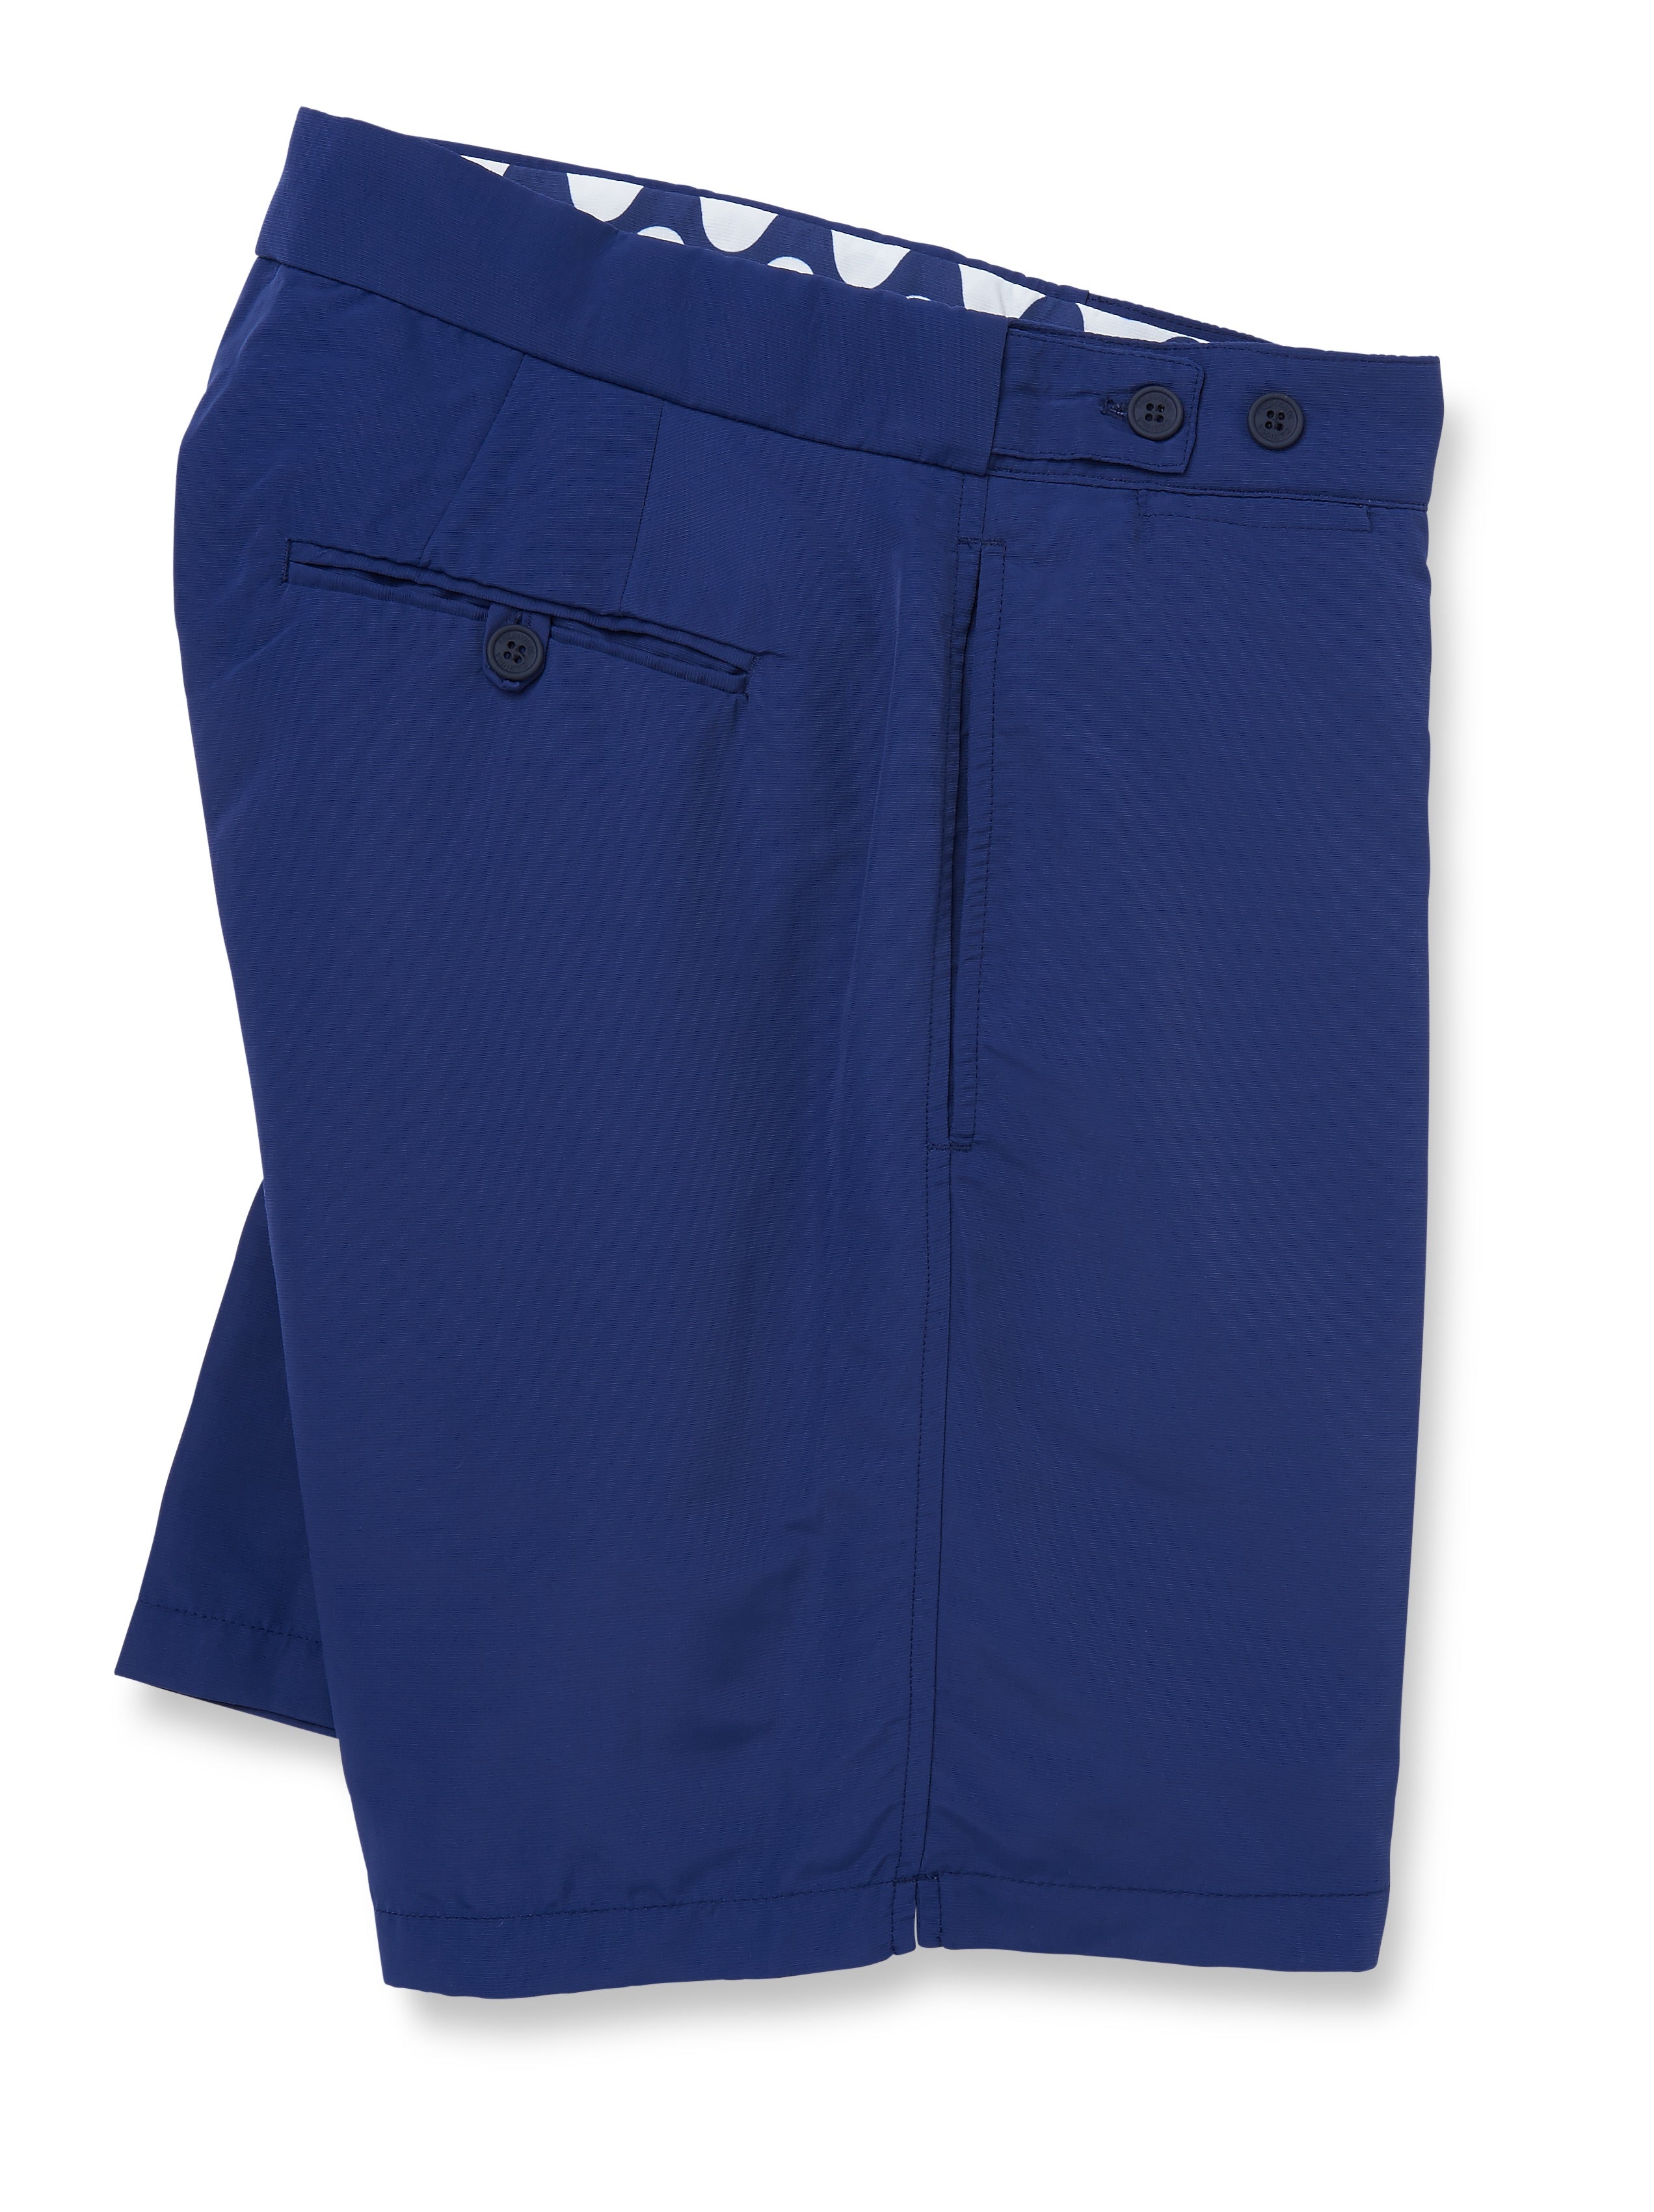 Frescobol Carioca Trunks Tailored Short Block navy blue